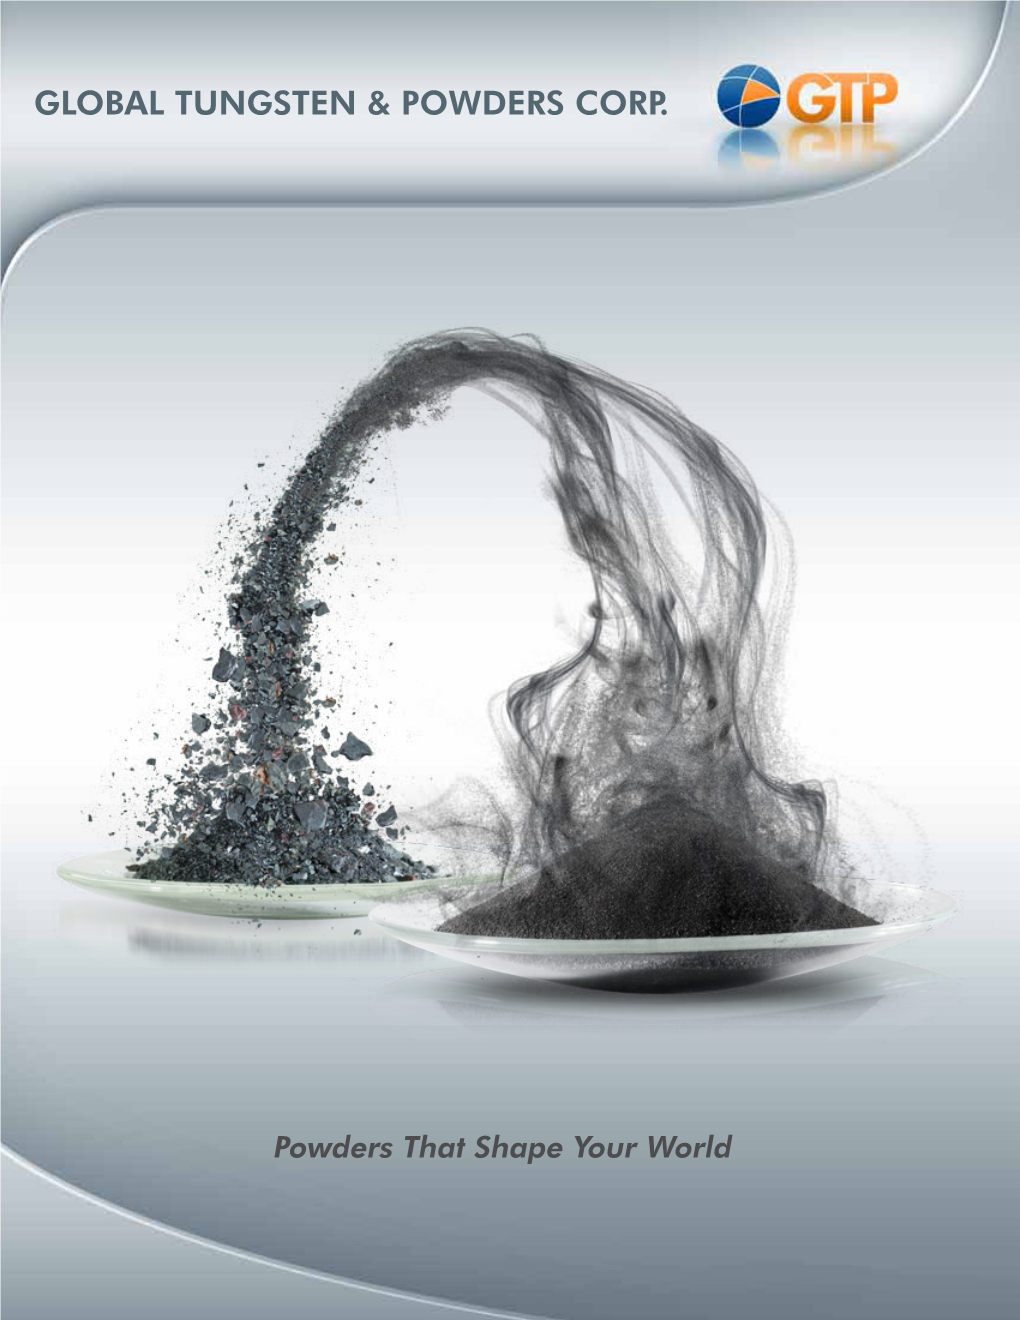 Global Tungsten & Powders Corp